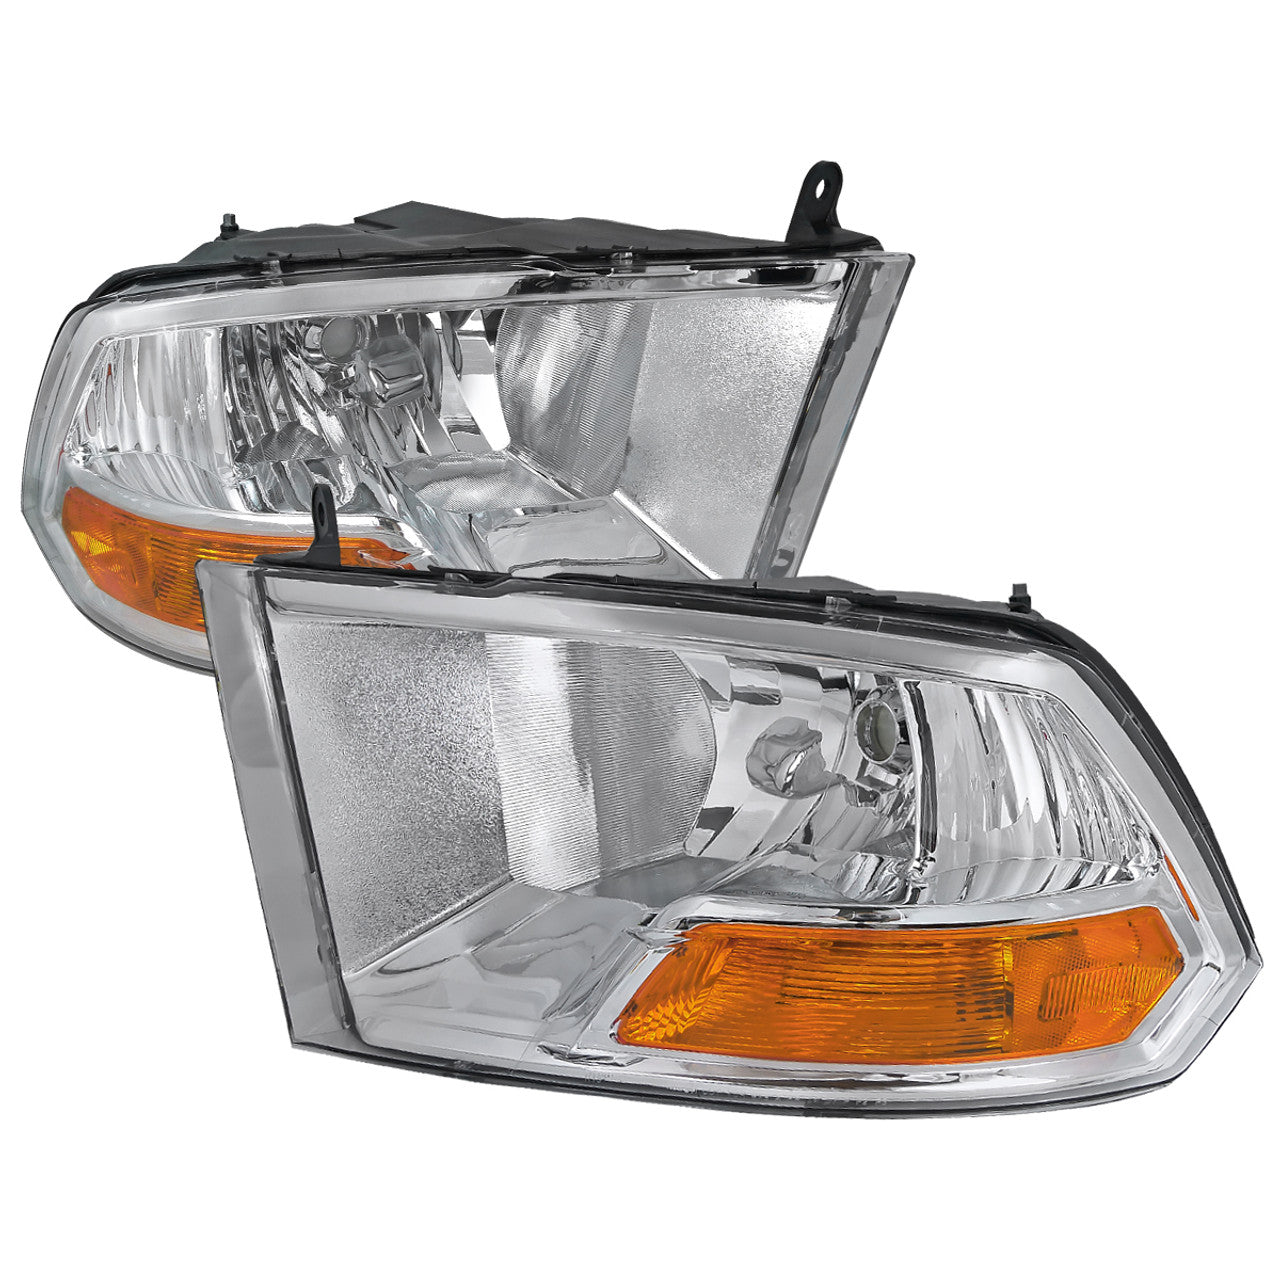 Spec D Euro Head Lights (Chrome): Dodge Ram 2009 - 2016